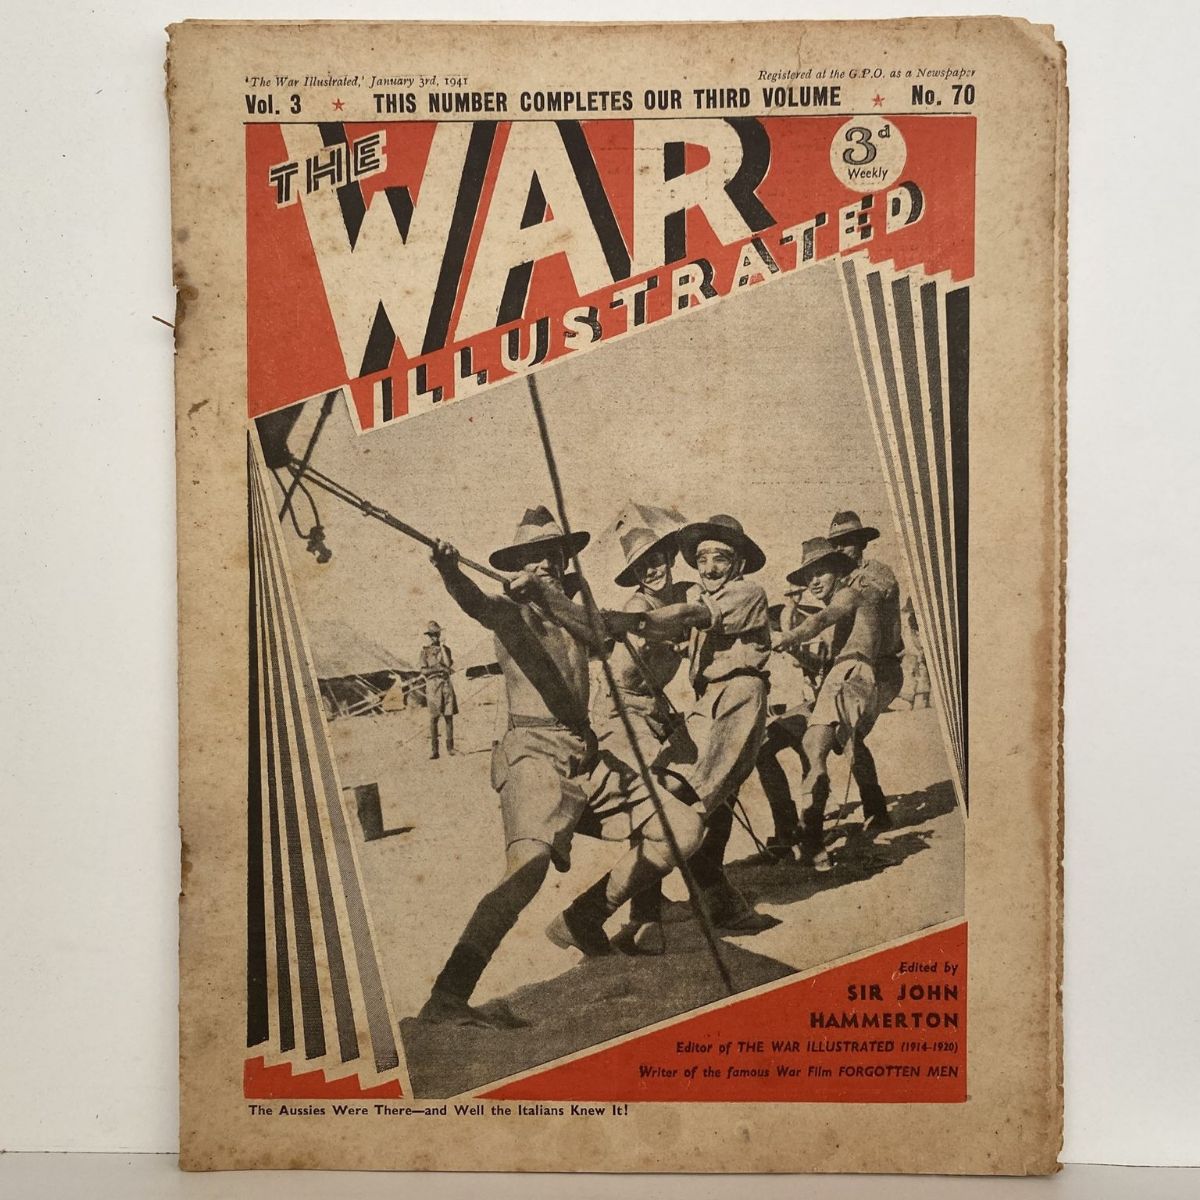 THE WAR ILLUSTRATED - Vol 3, No 70, 3rd Jan 1941